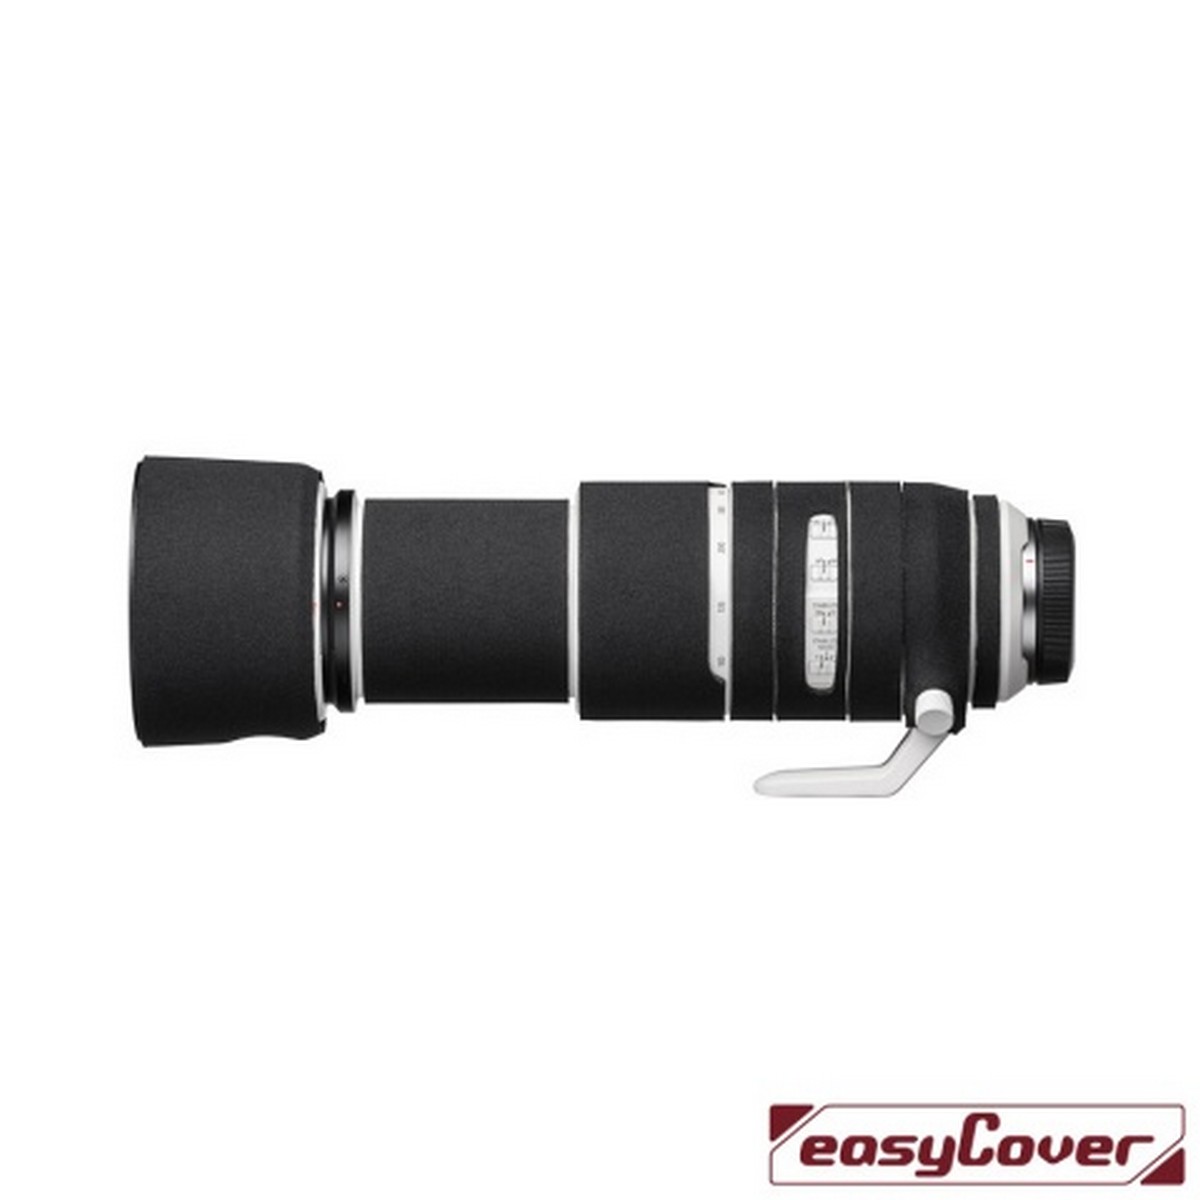 Easycover Lens Oak Objektivschutz für Canon RF 100-500 mm 1:4,5-7,1L IS USM Schwarz